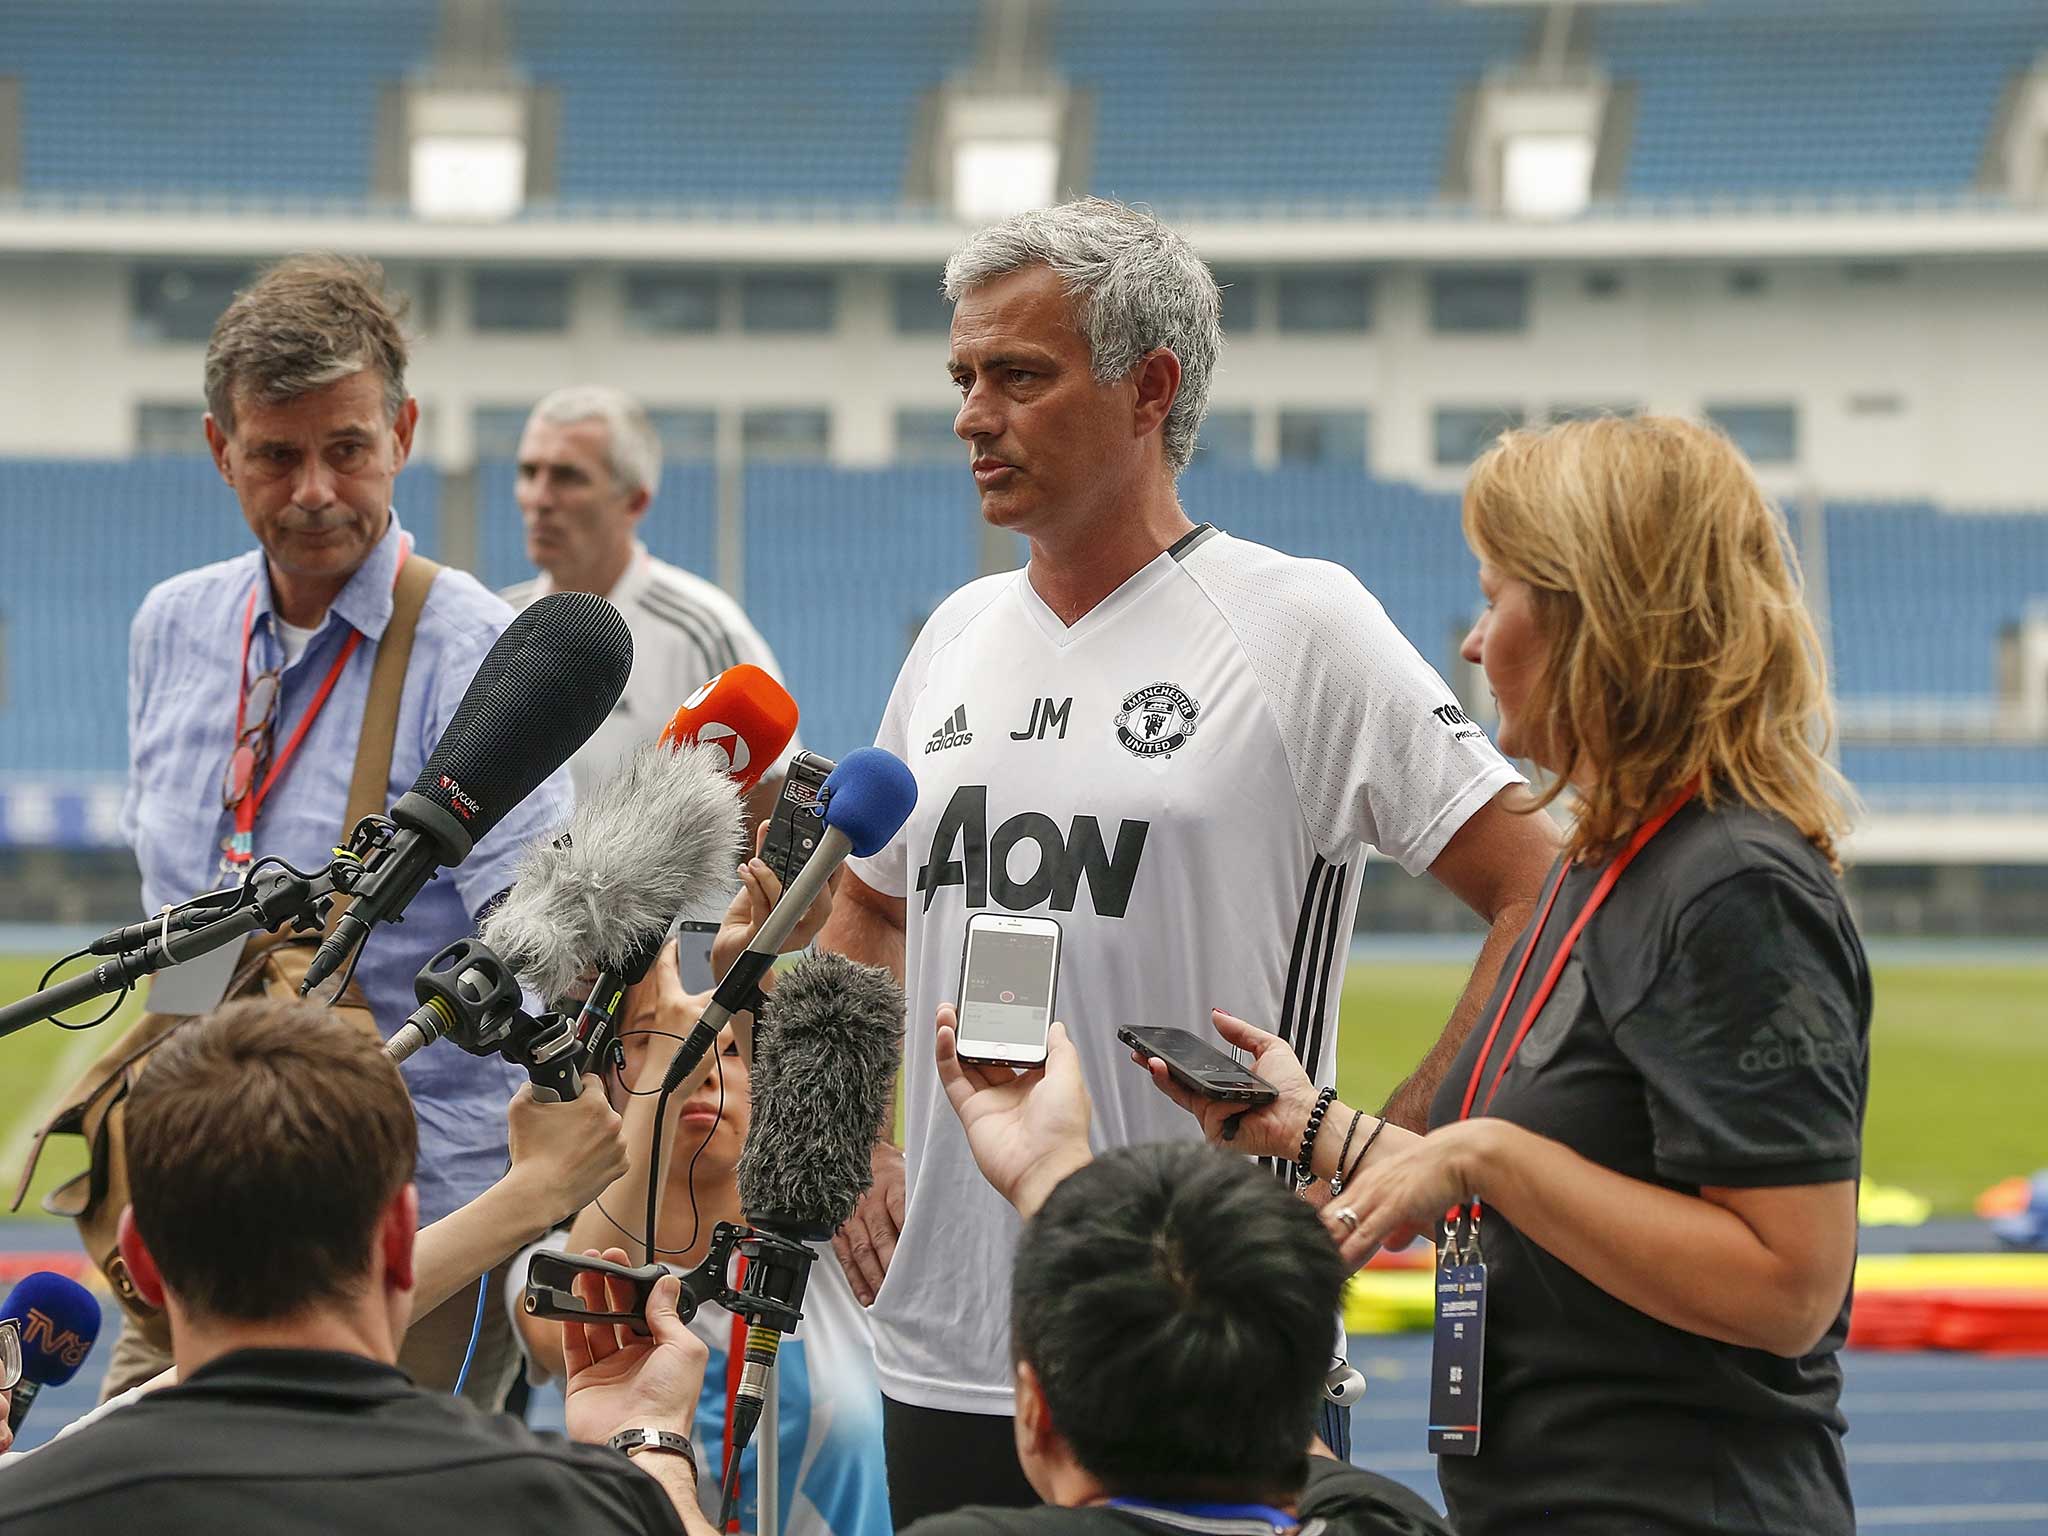 Jose Mourinho speaks to the media outdoors in bizarre scenes in China